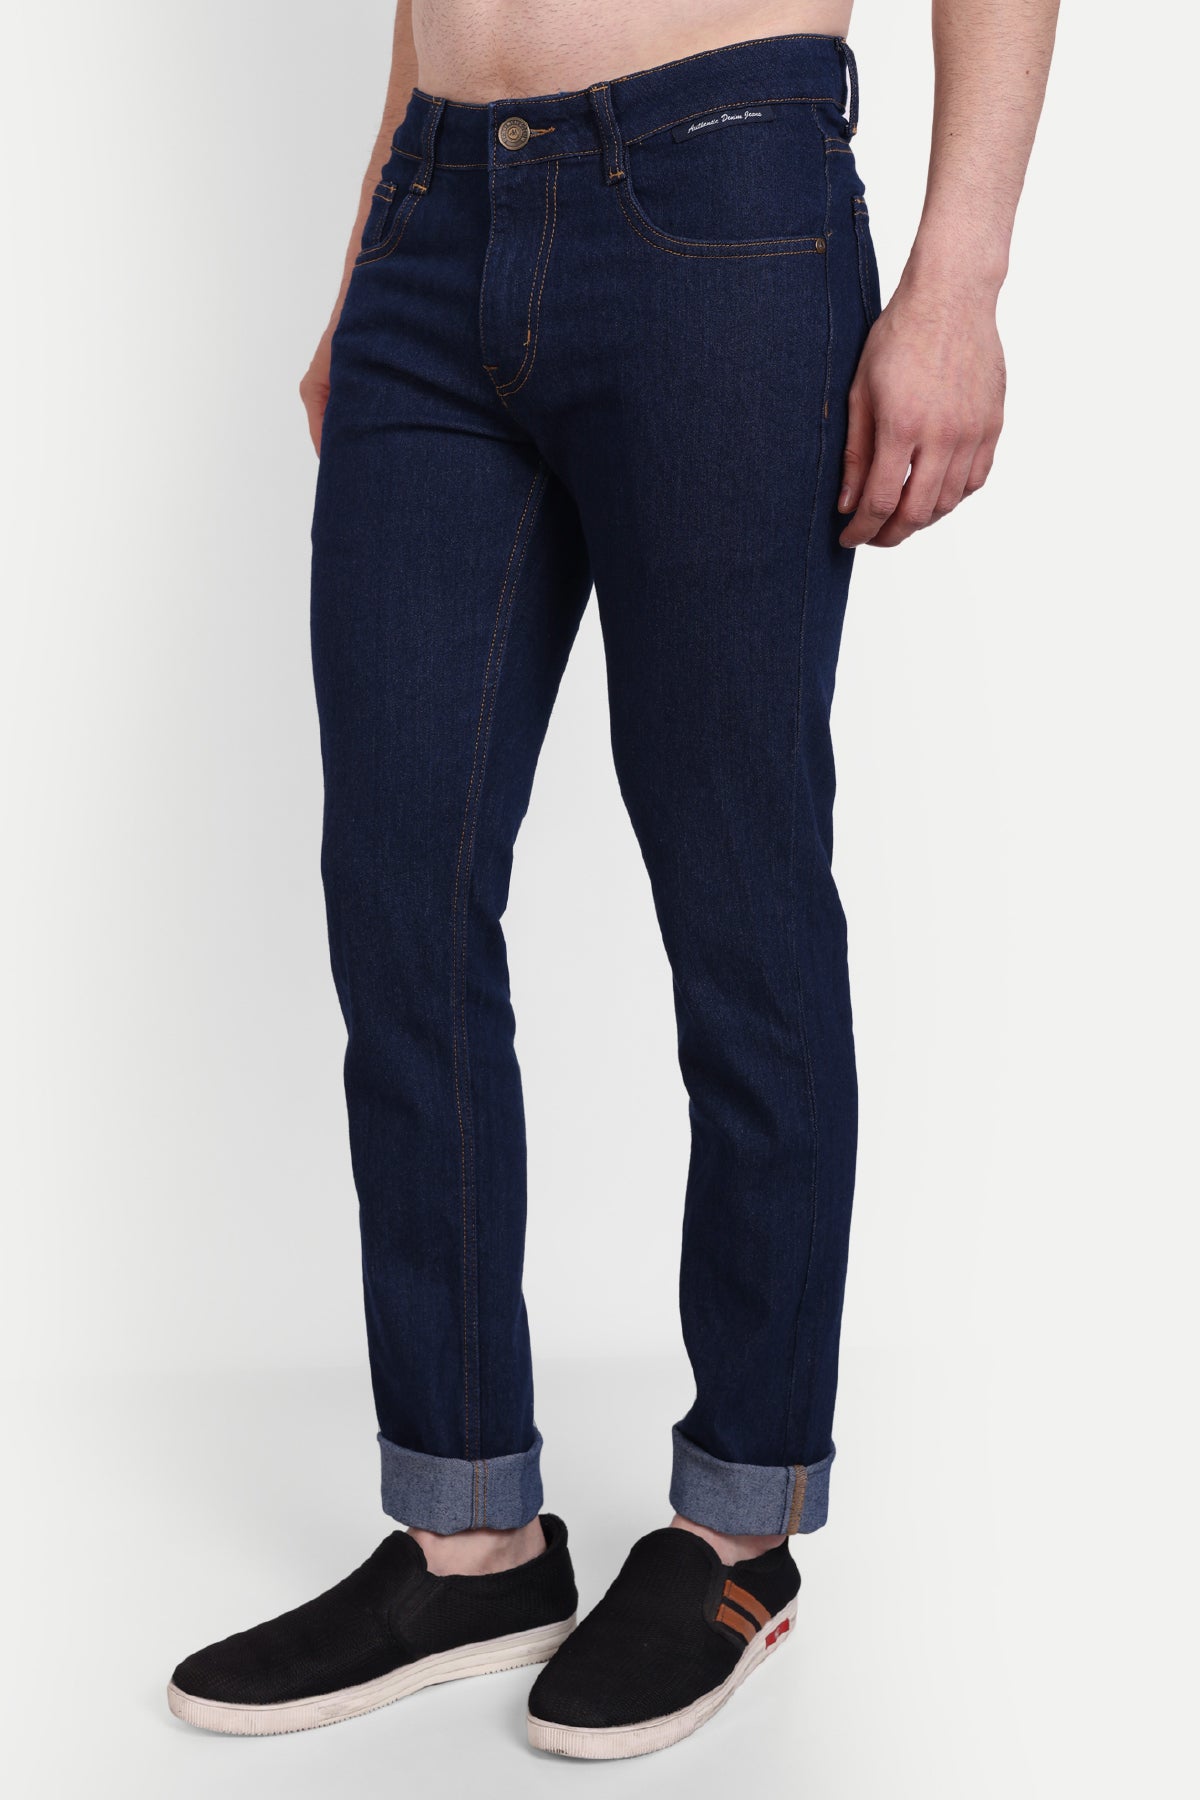 Men's Raw Blue Slim Fit Jeans